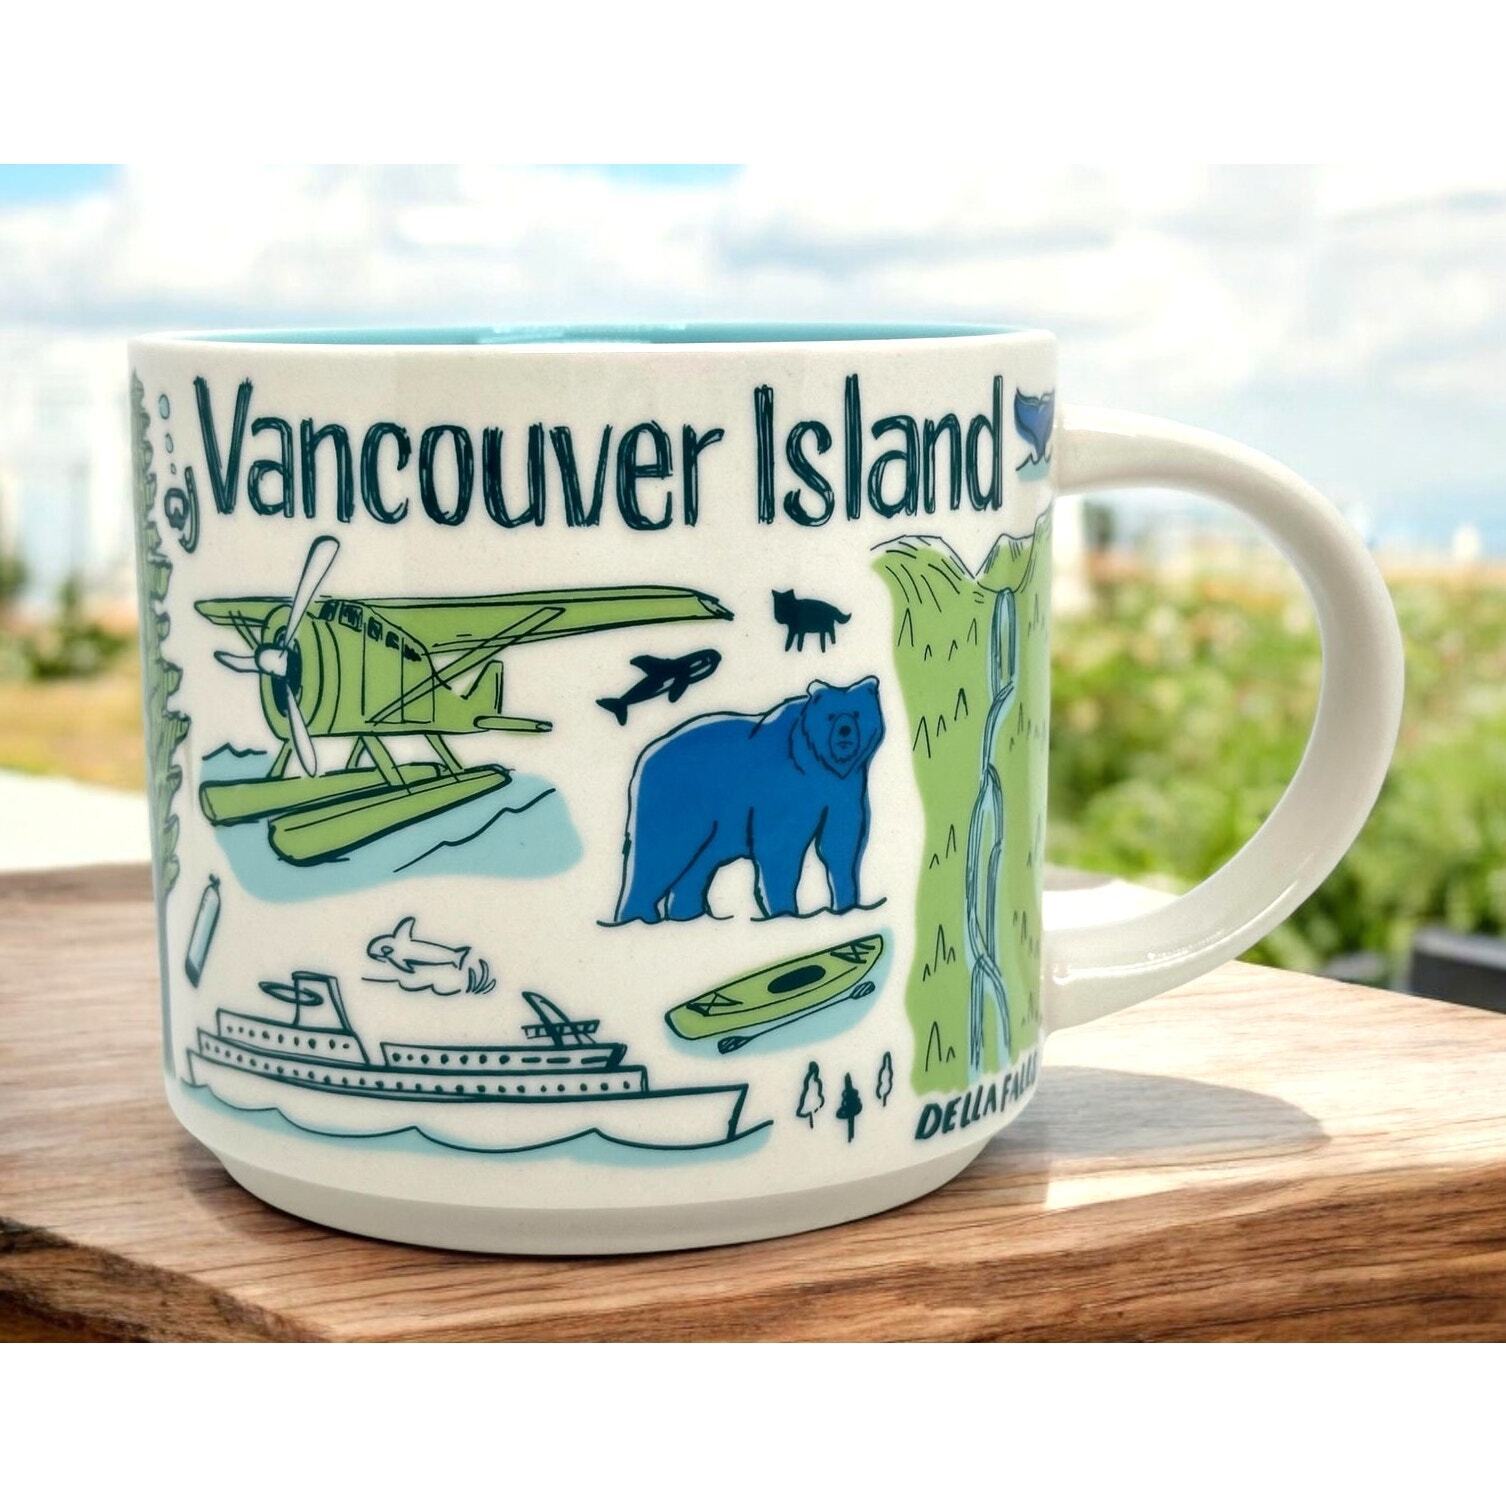 Starbucks Vancouver Island Been There Series Ceramic Coffee Mug Cup 14 oz